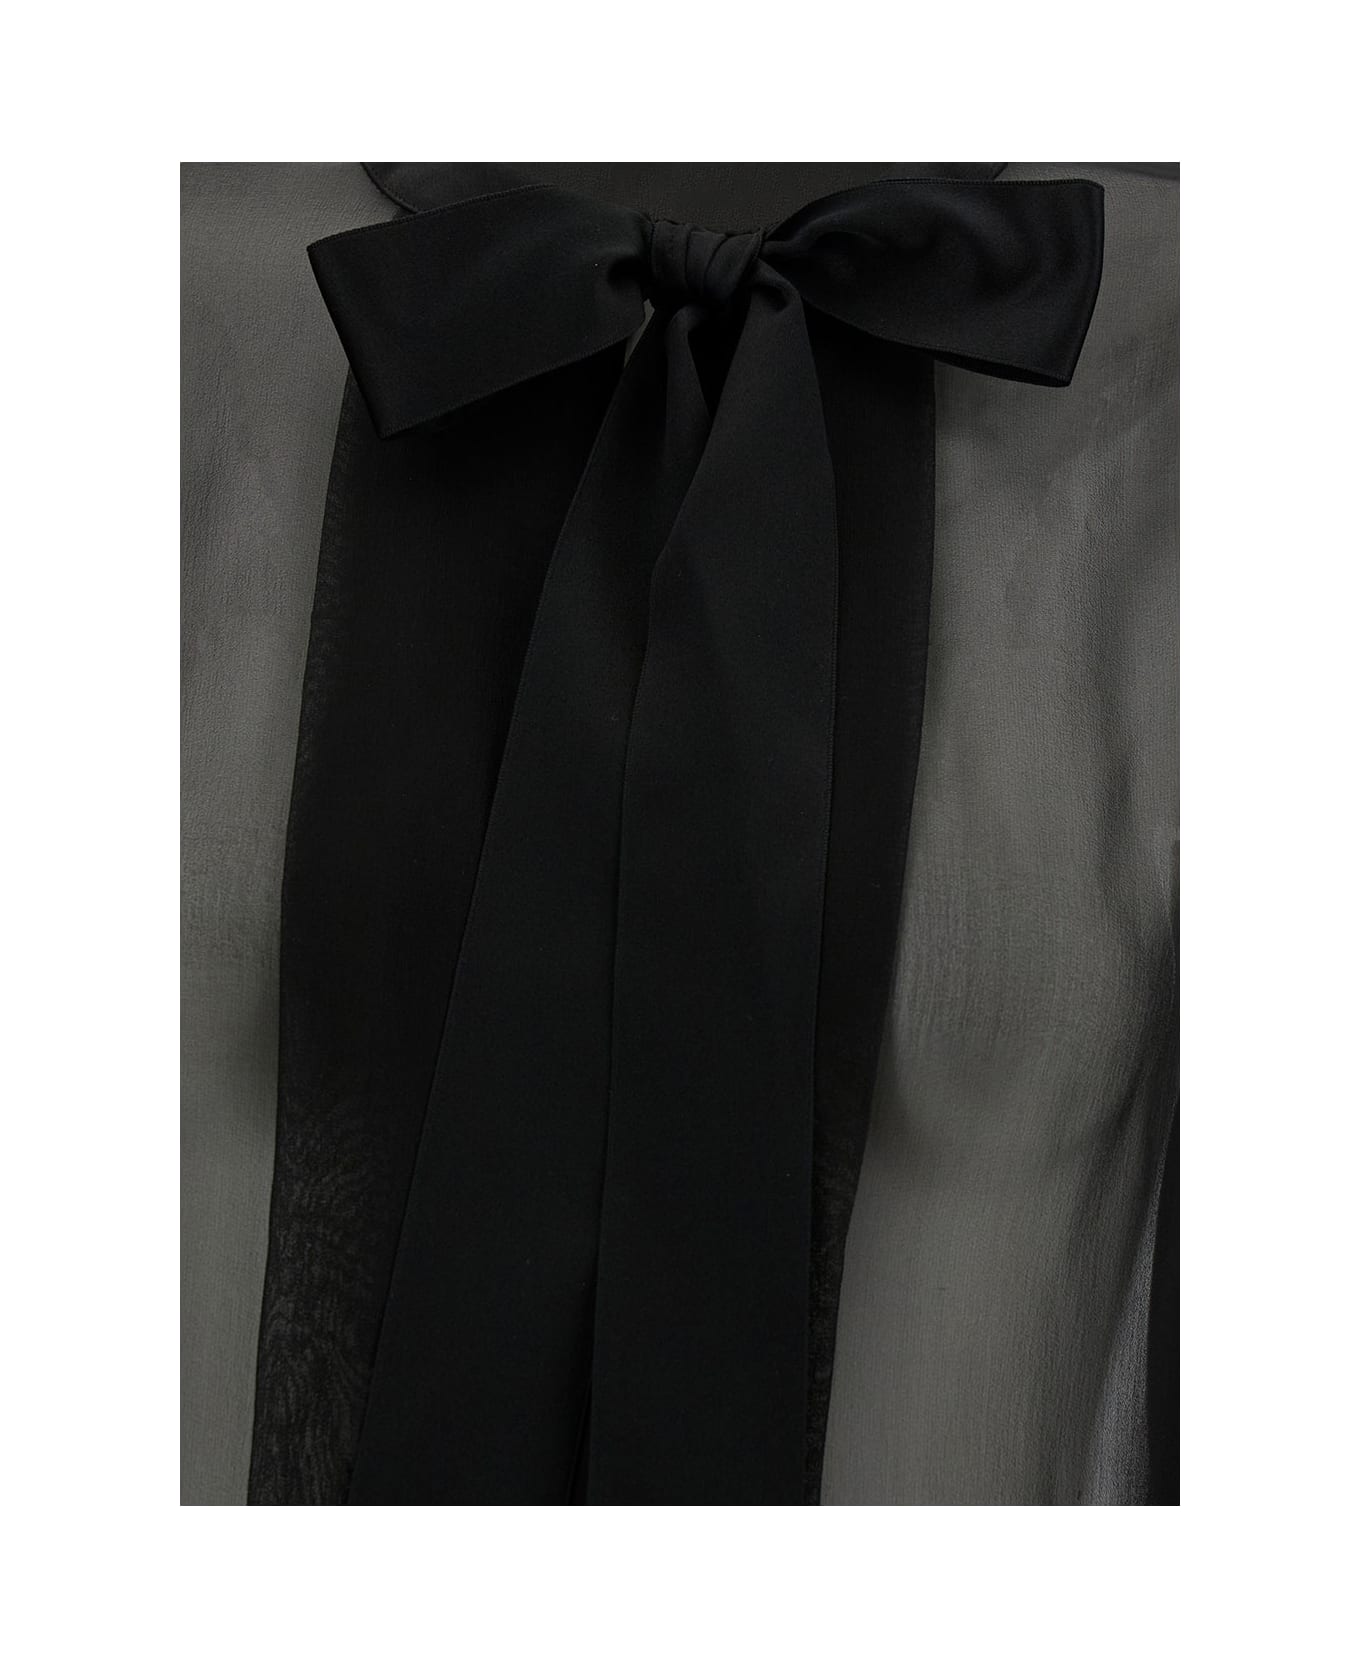 Saint Laurent Black Shirt With Bow Detail In Semi-sheer Silk Woman - Black